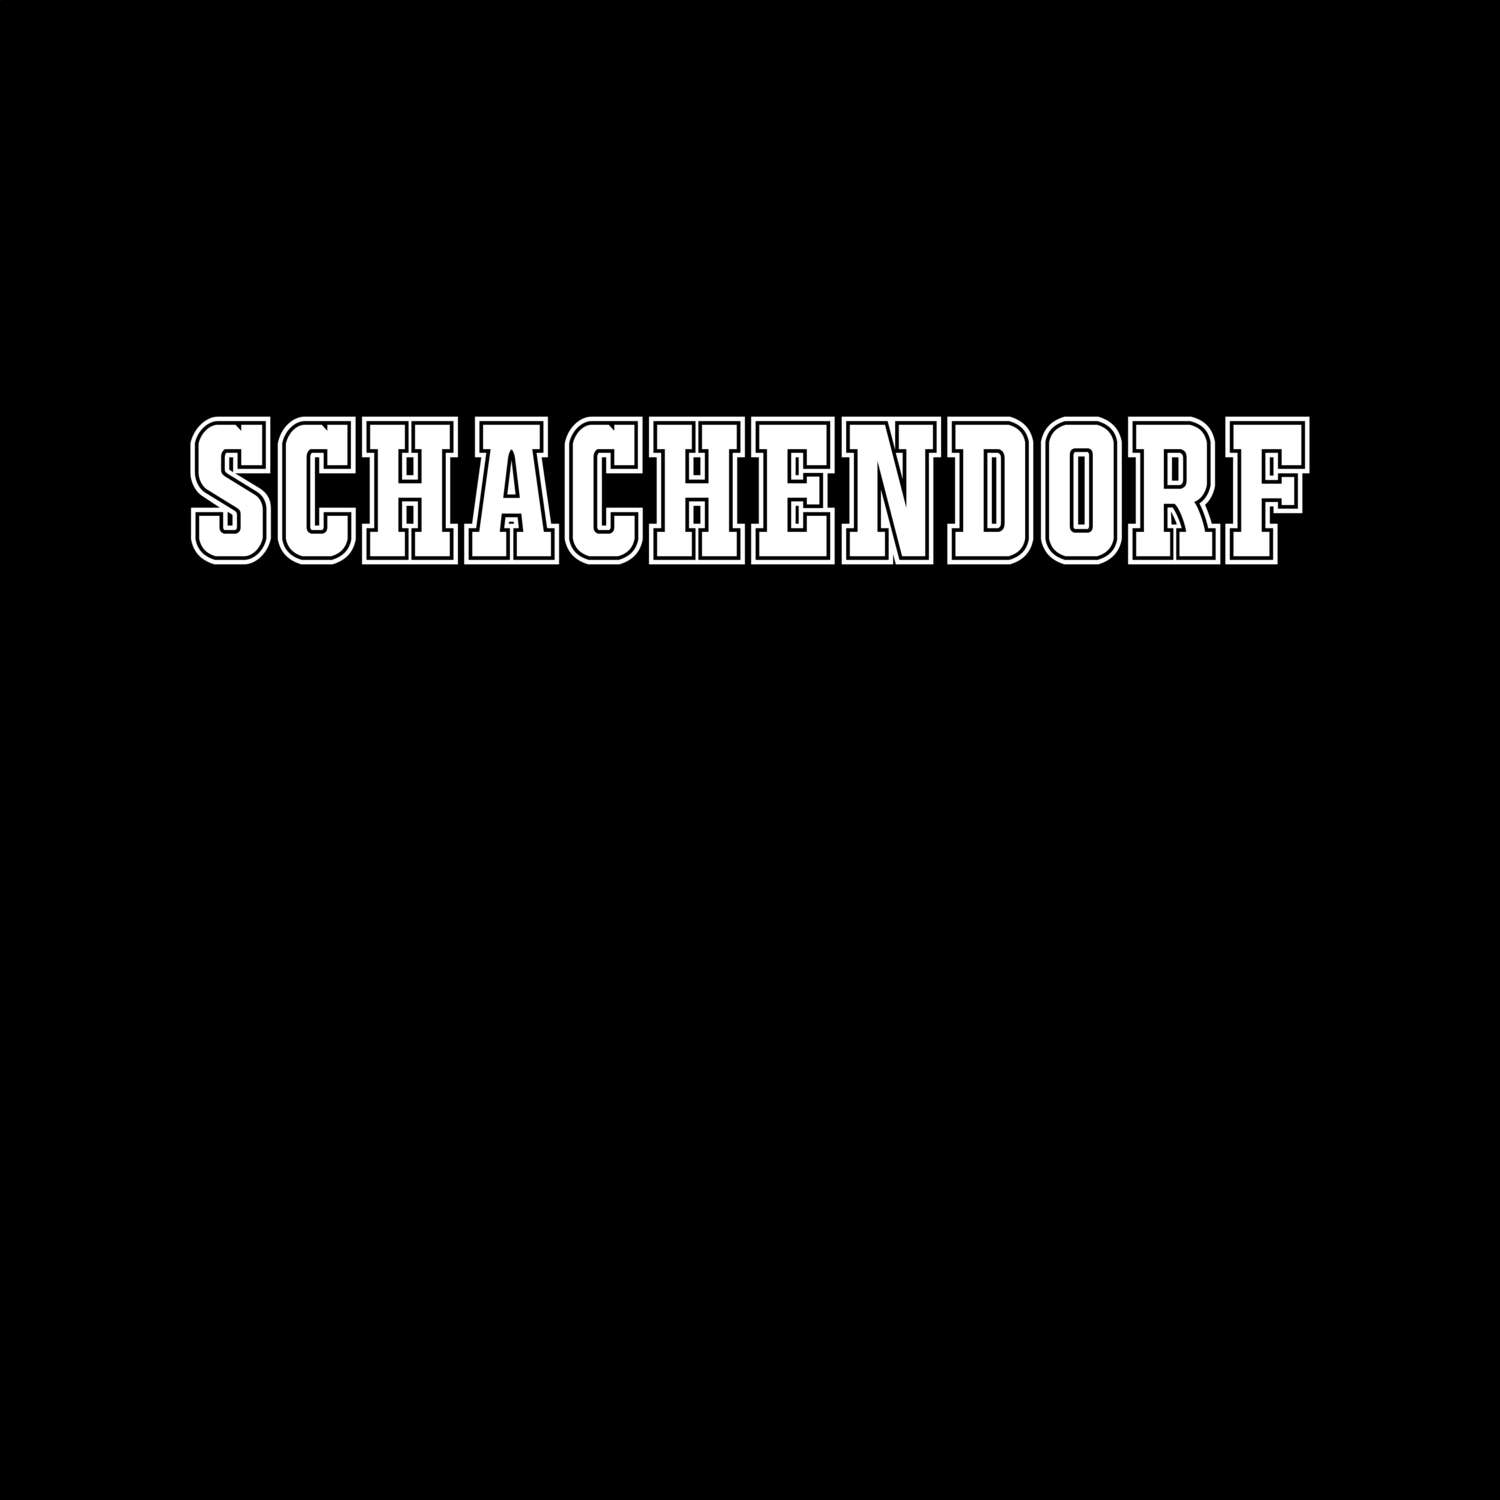 Schachendorf T-Shirt »Classic«